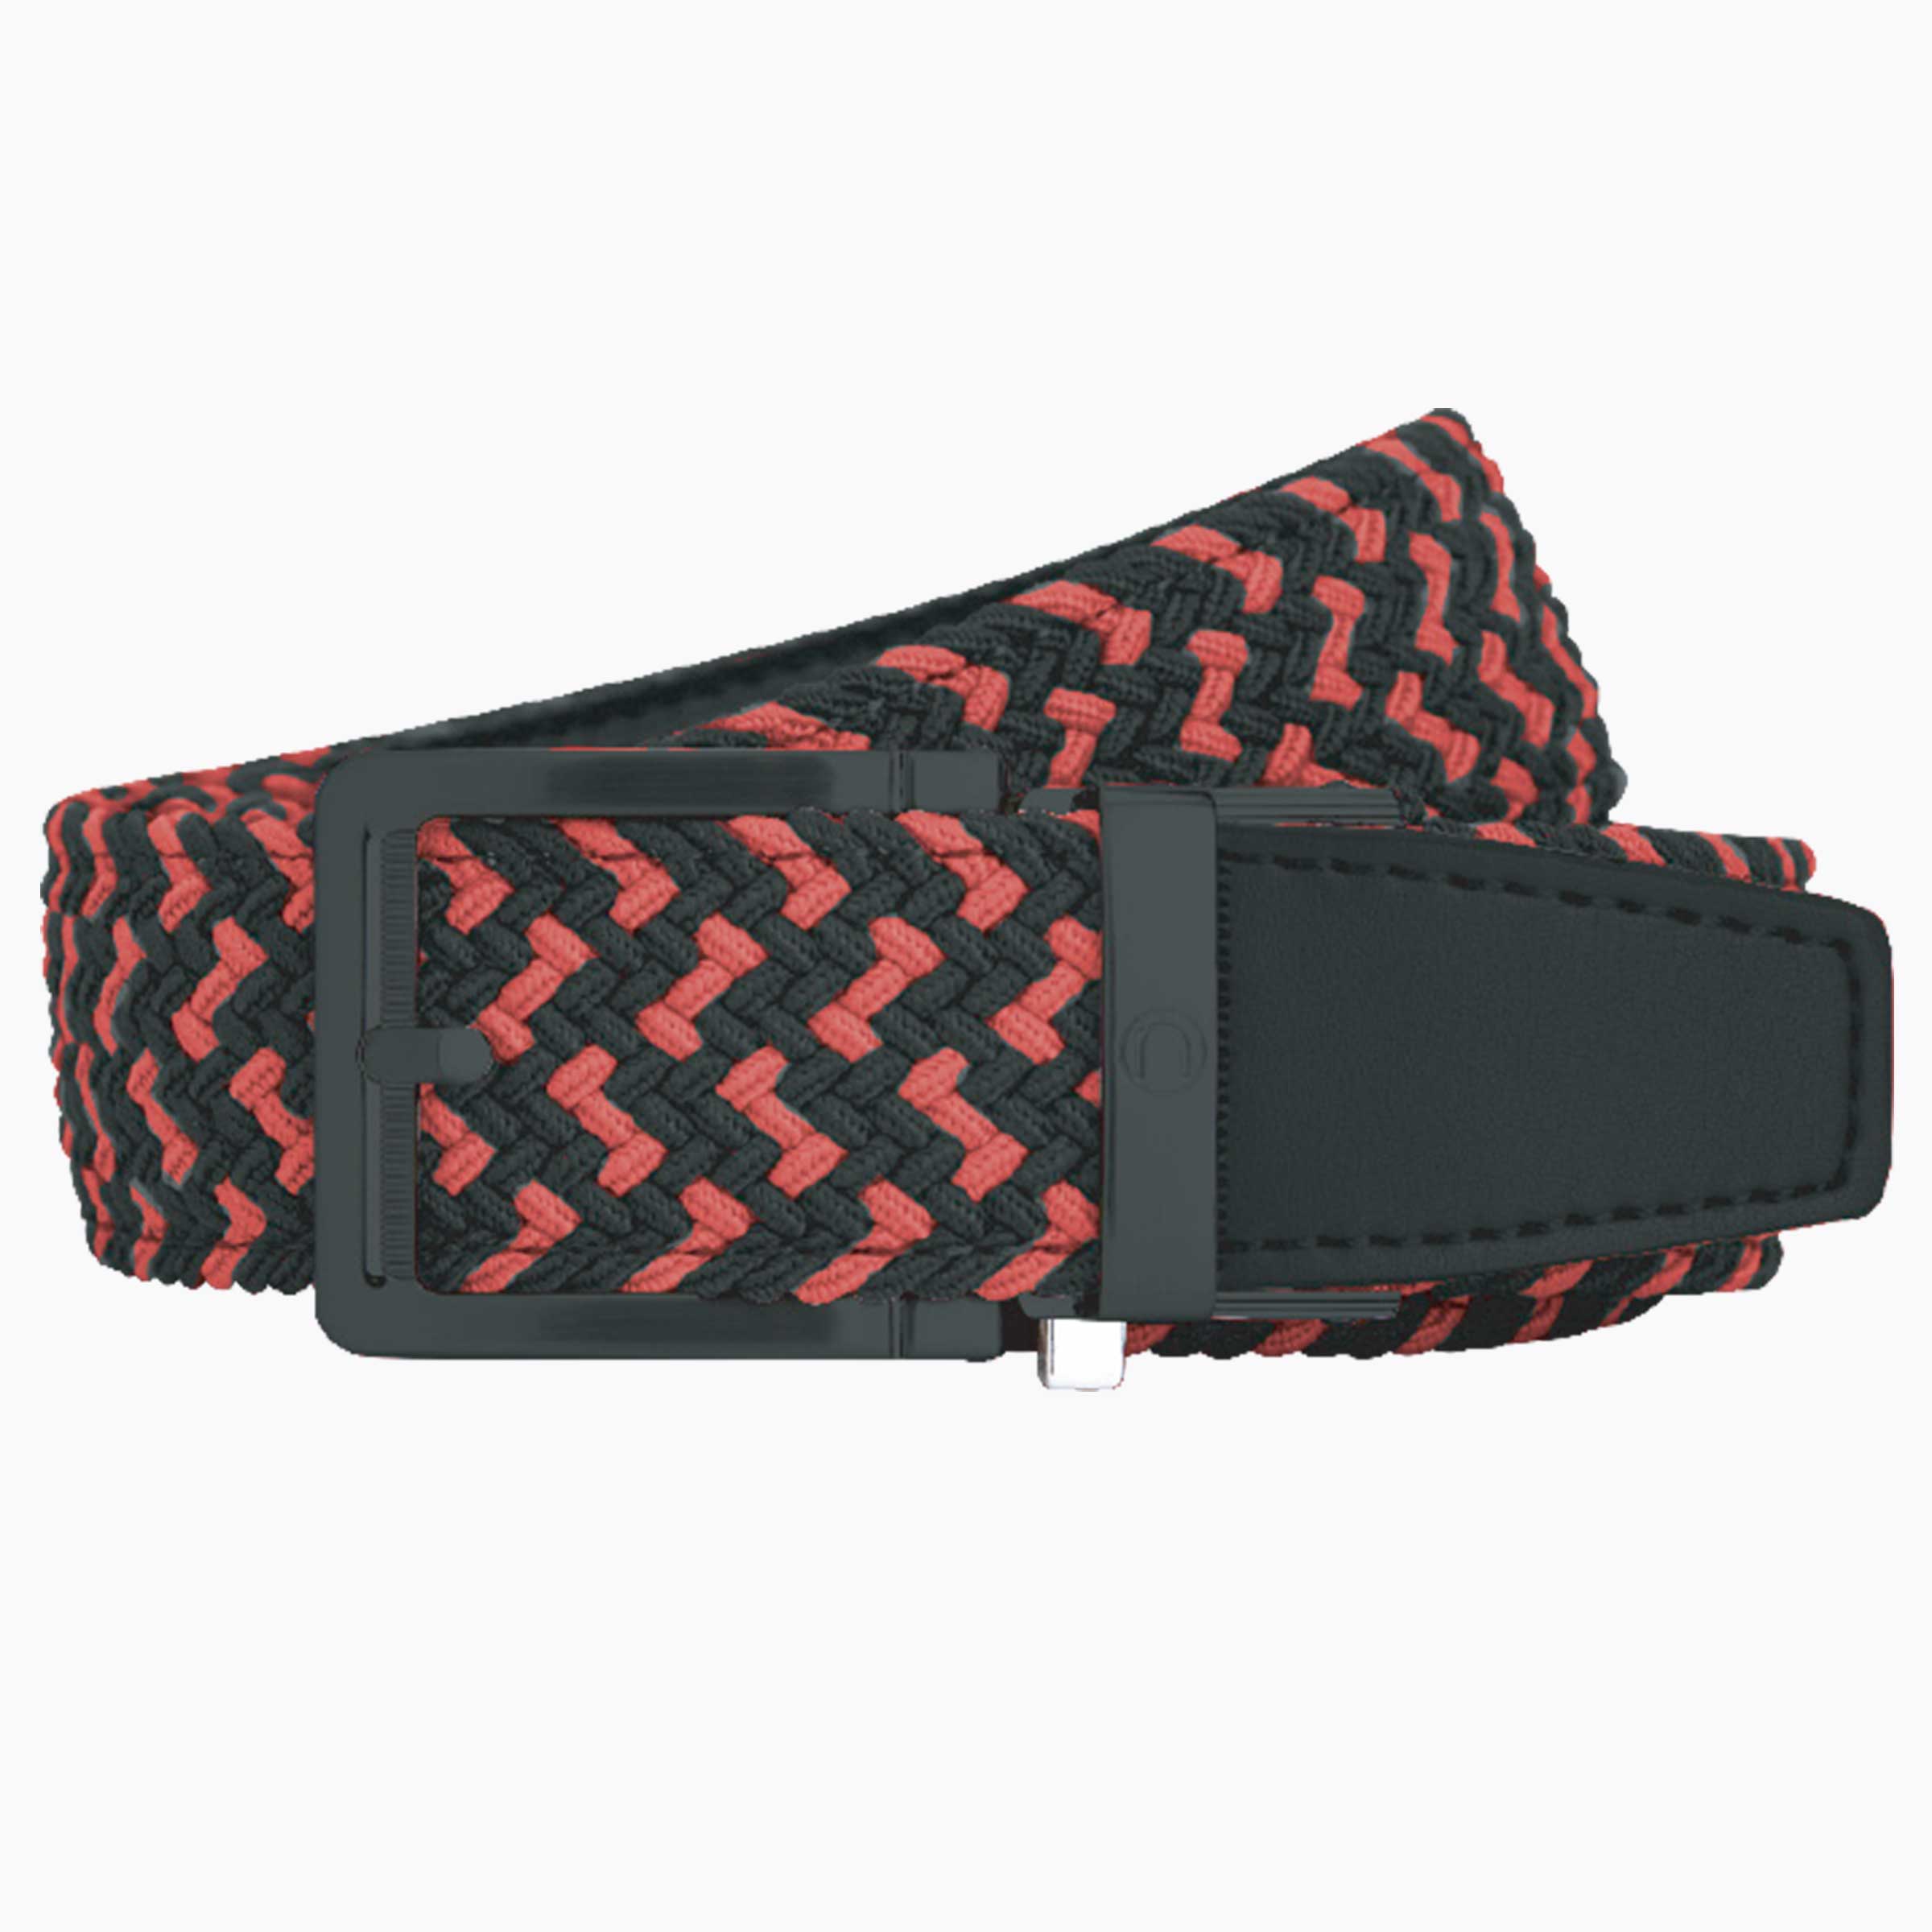 Braided Scarlet & Black Golf Belt 1.38" [35mm]